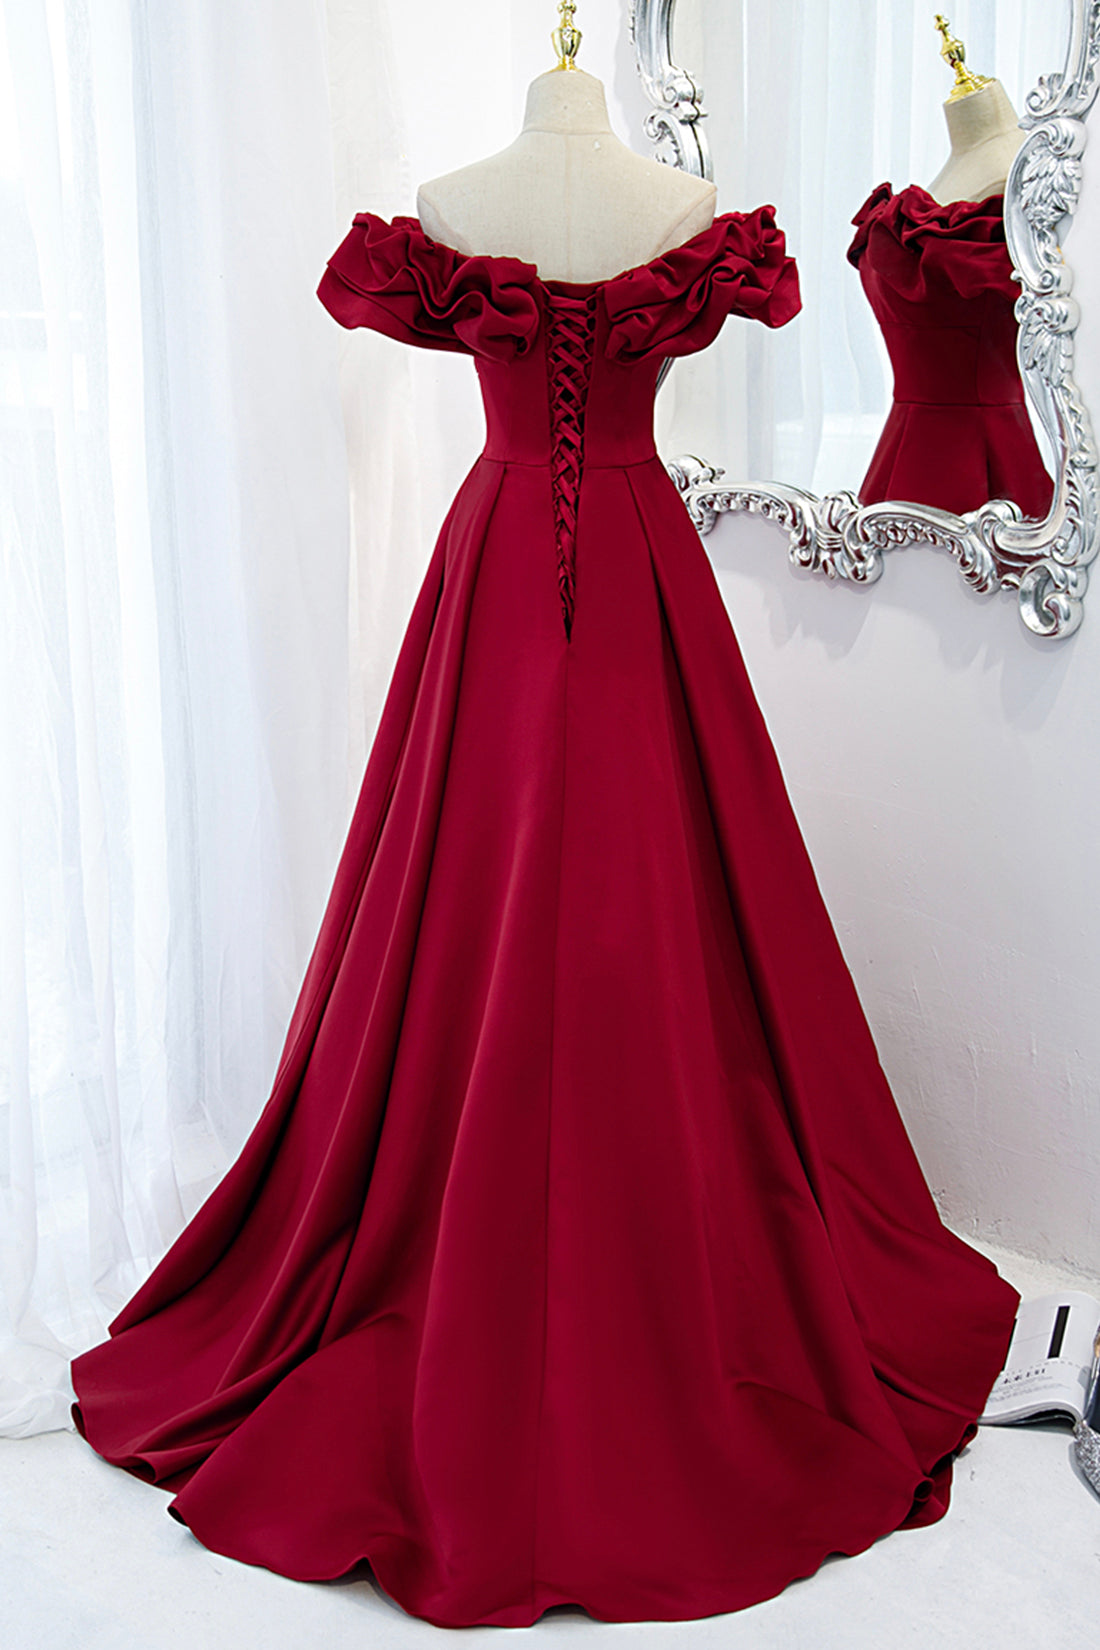 Burgundy Satin Long Prom Dress, A-Line Off Shoulder Evening Party Dress